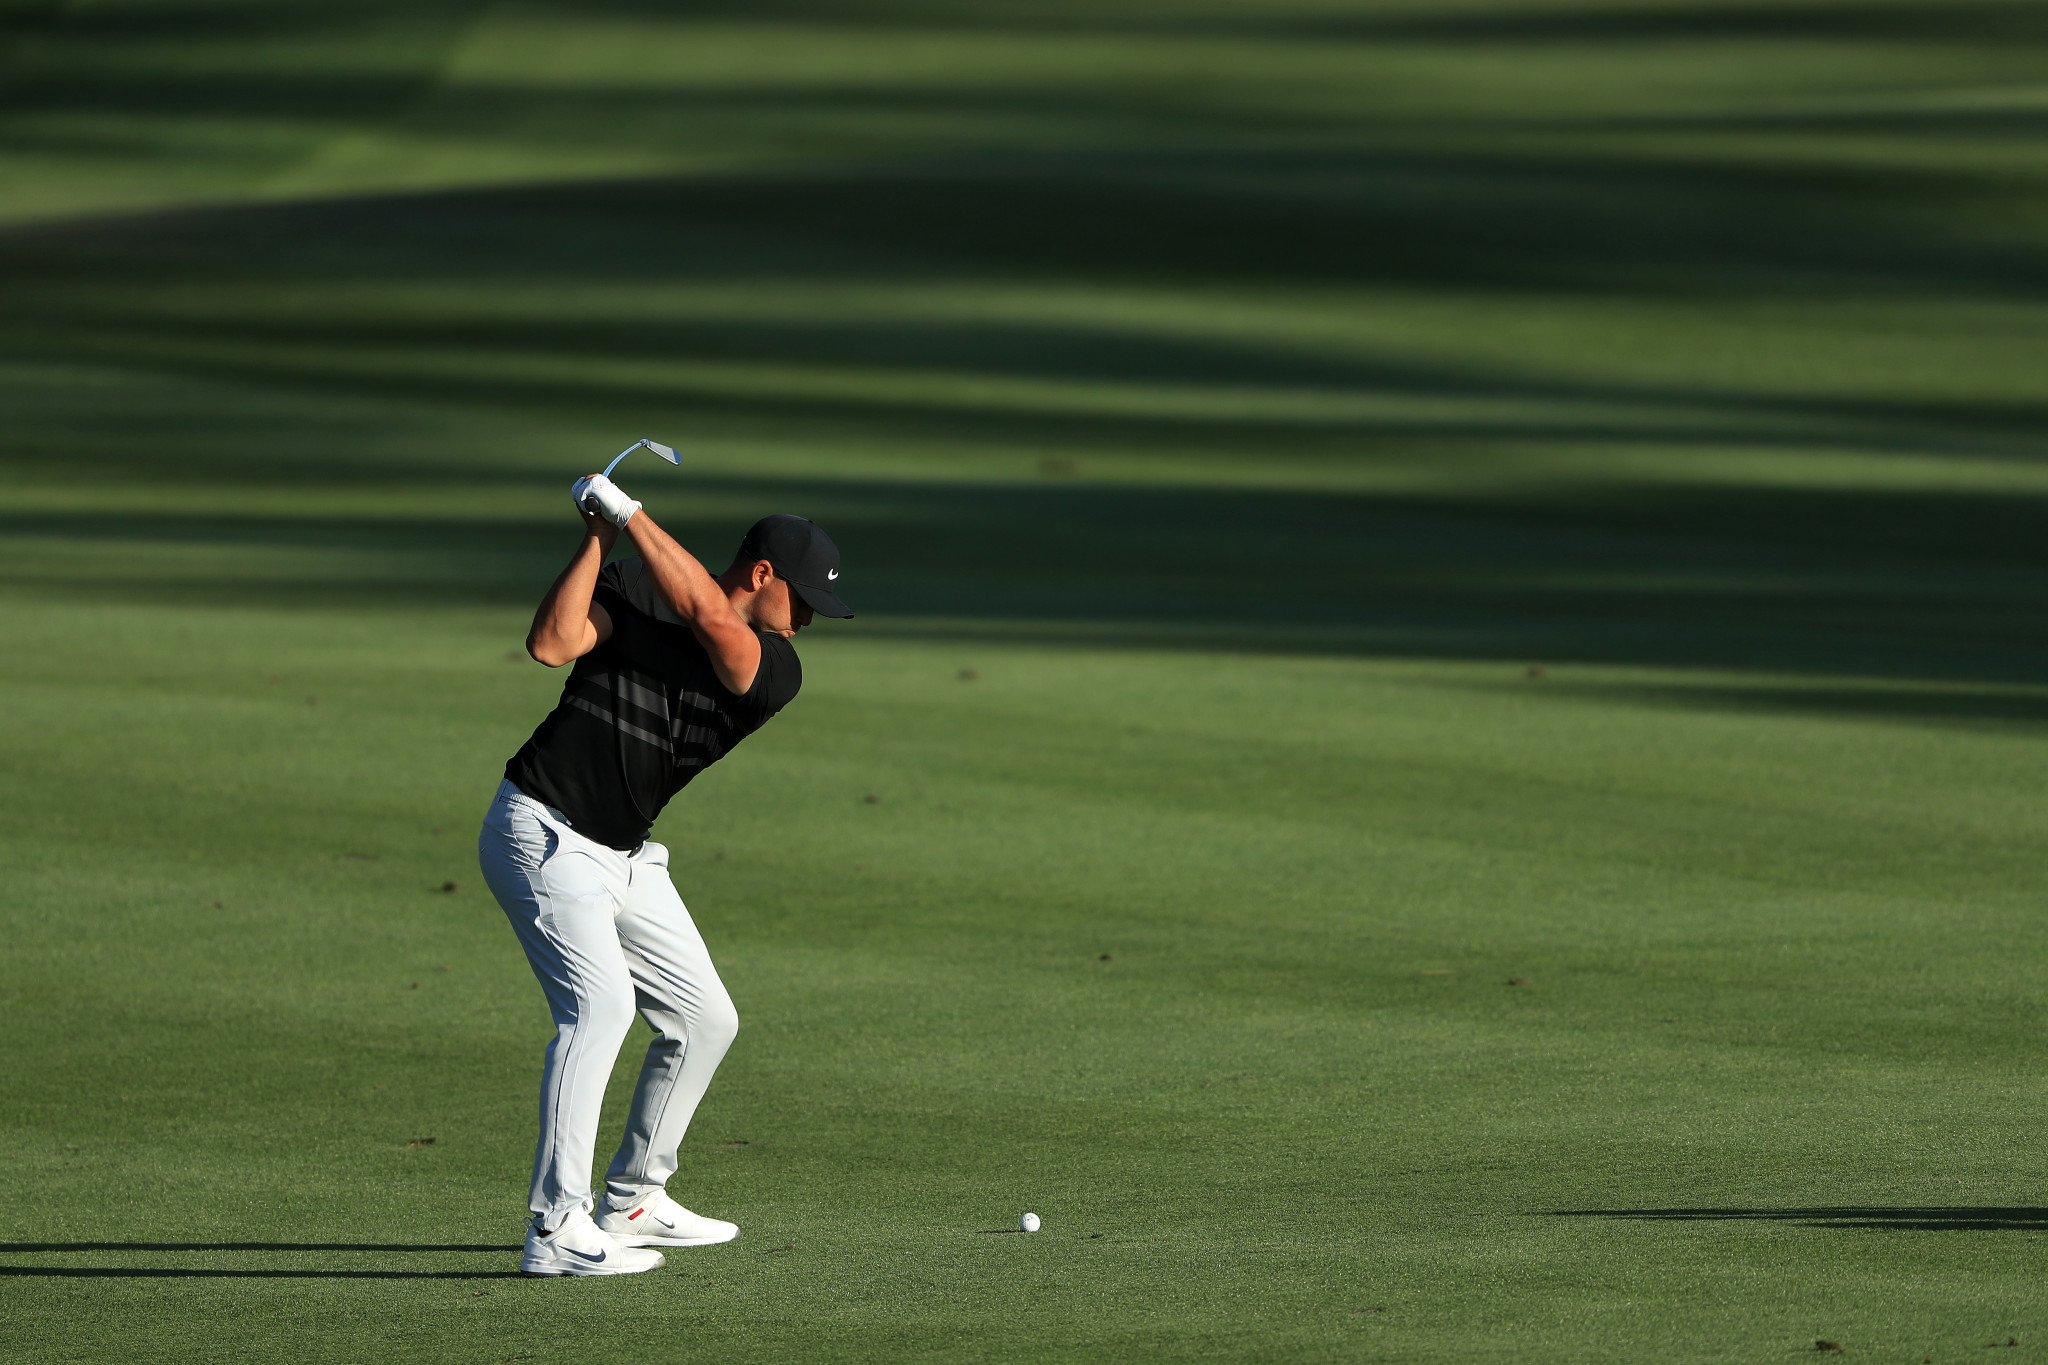 Men's golf world rankings to resume as PGA Tour gets back underway